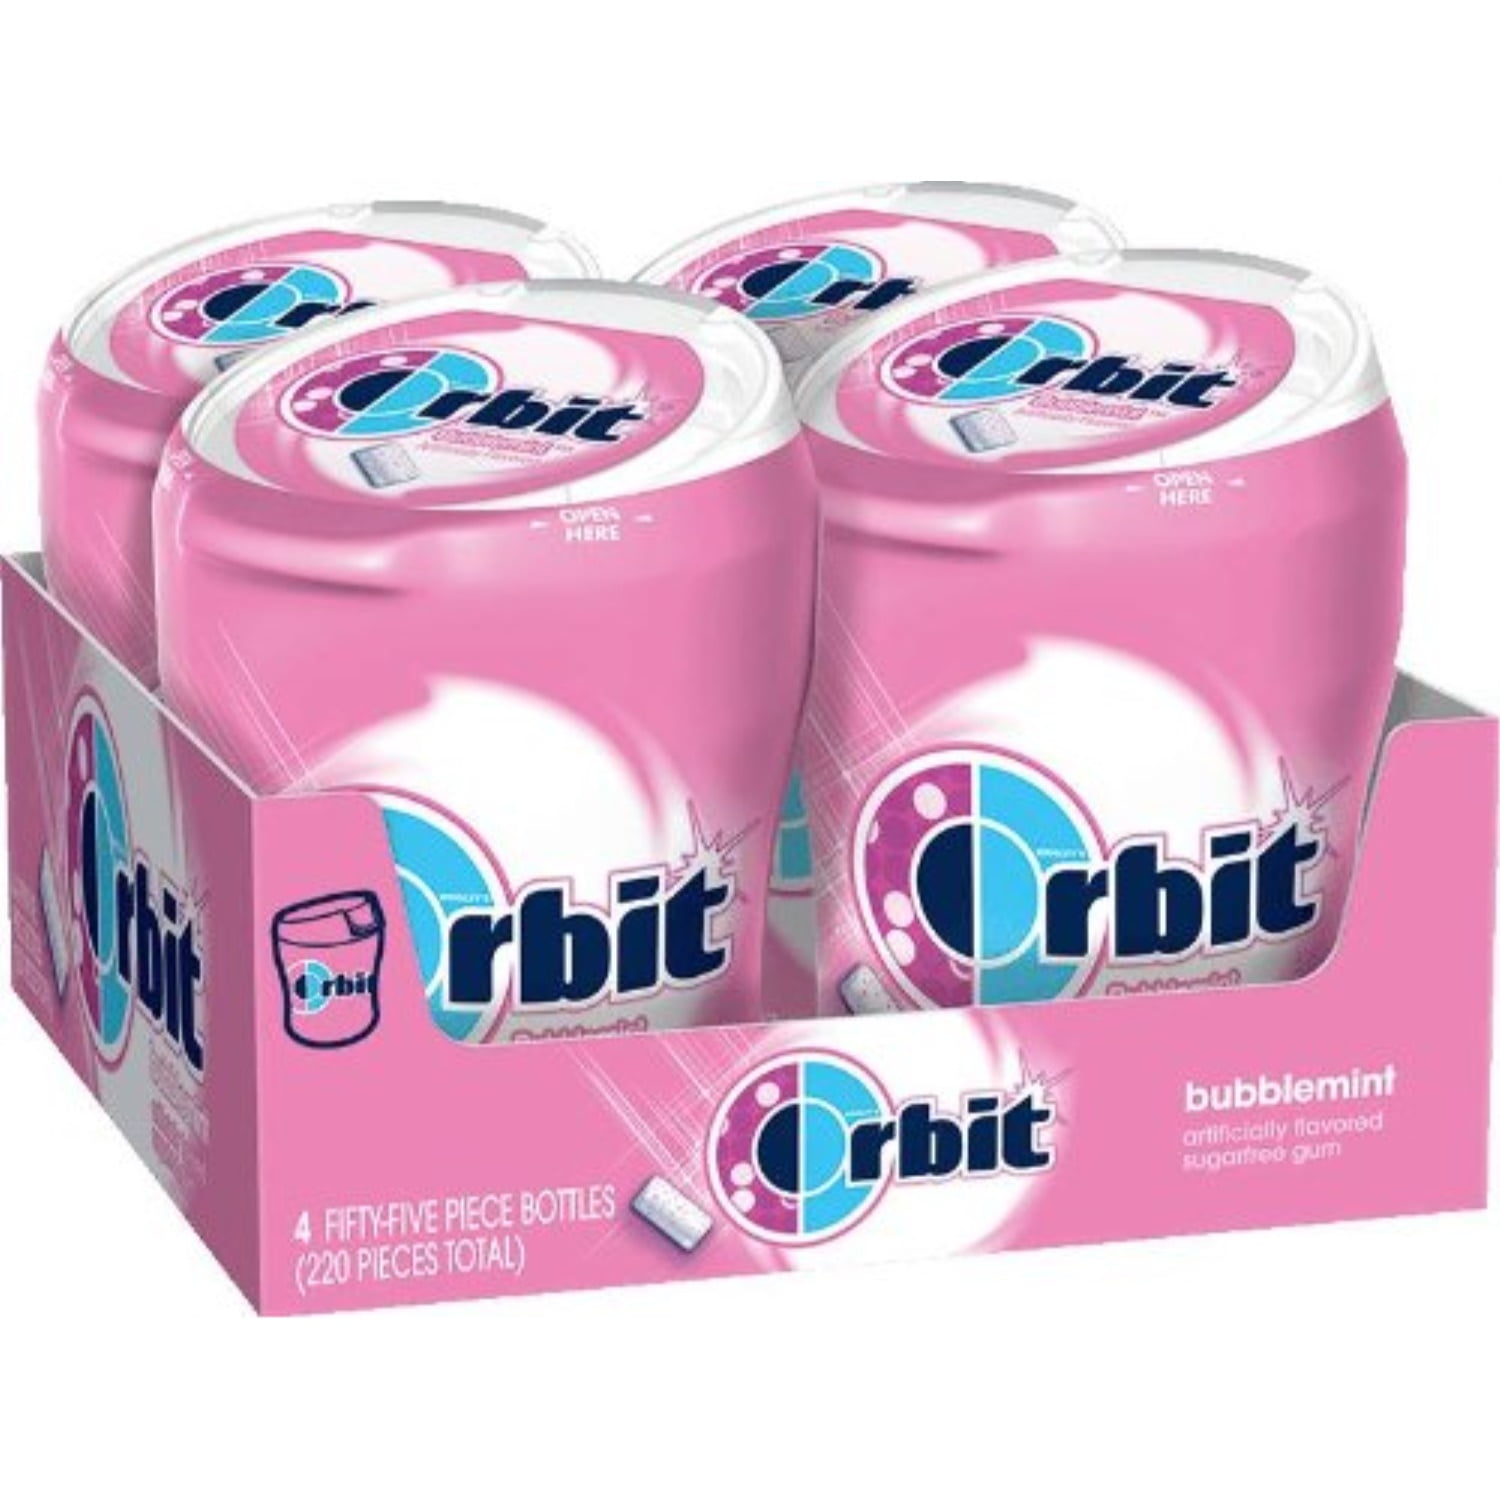 orbit bubblemint sugarfree gum, 55 piece bottles (pack of 4)